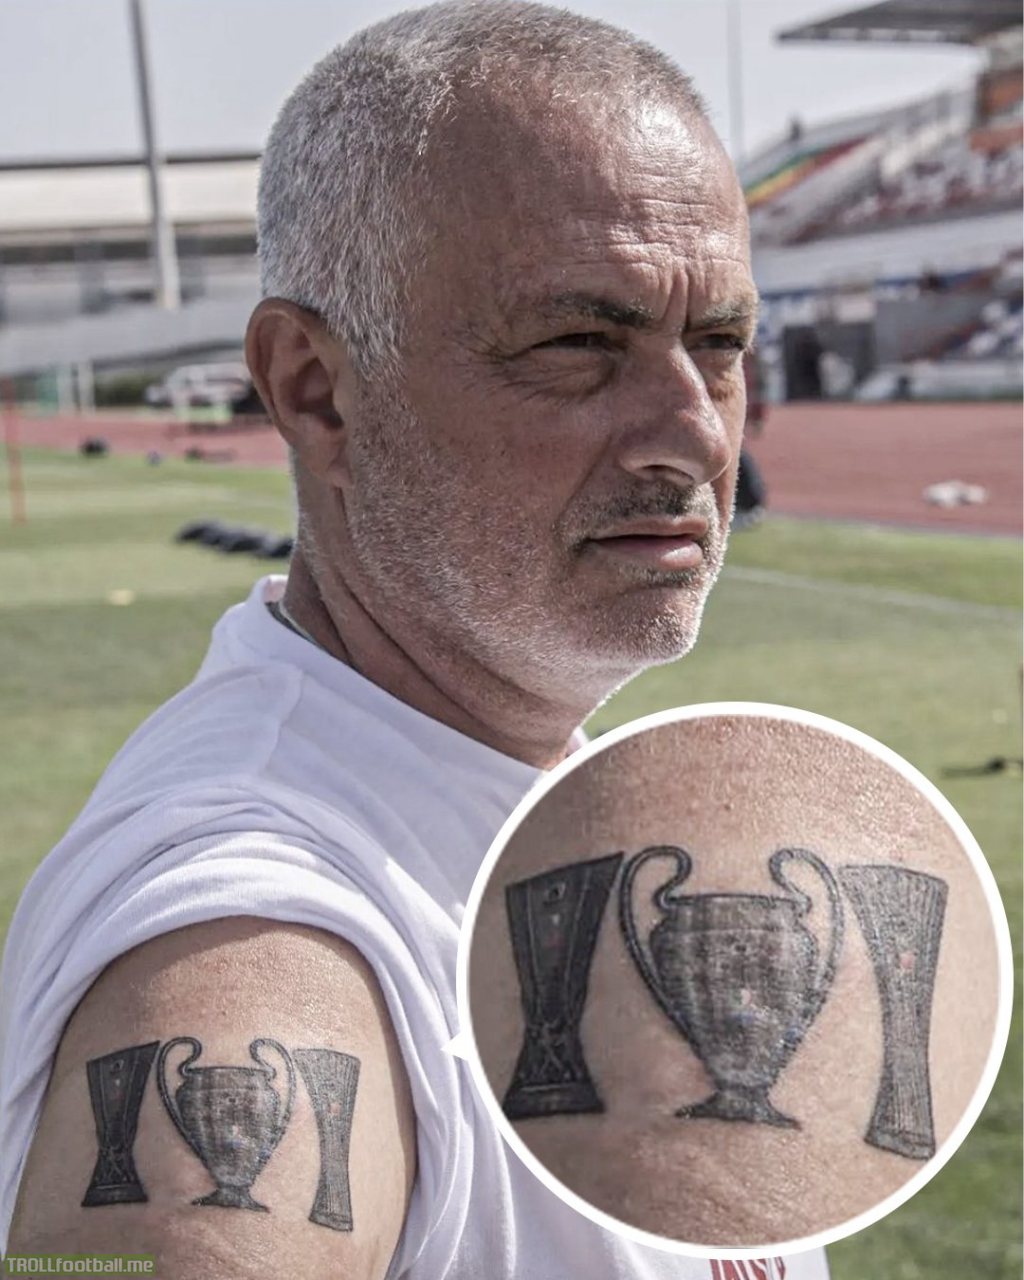 Jose Mourinho has now got all three European titles tattooed on him